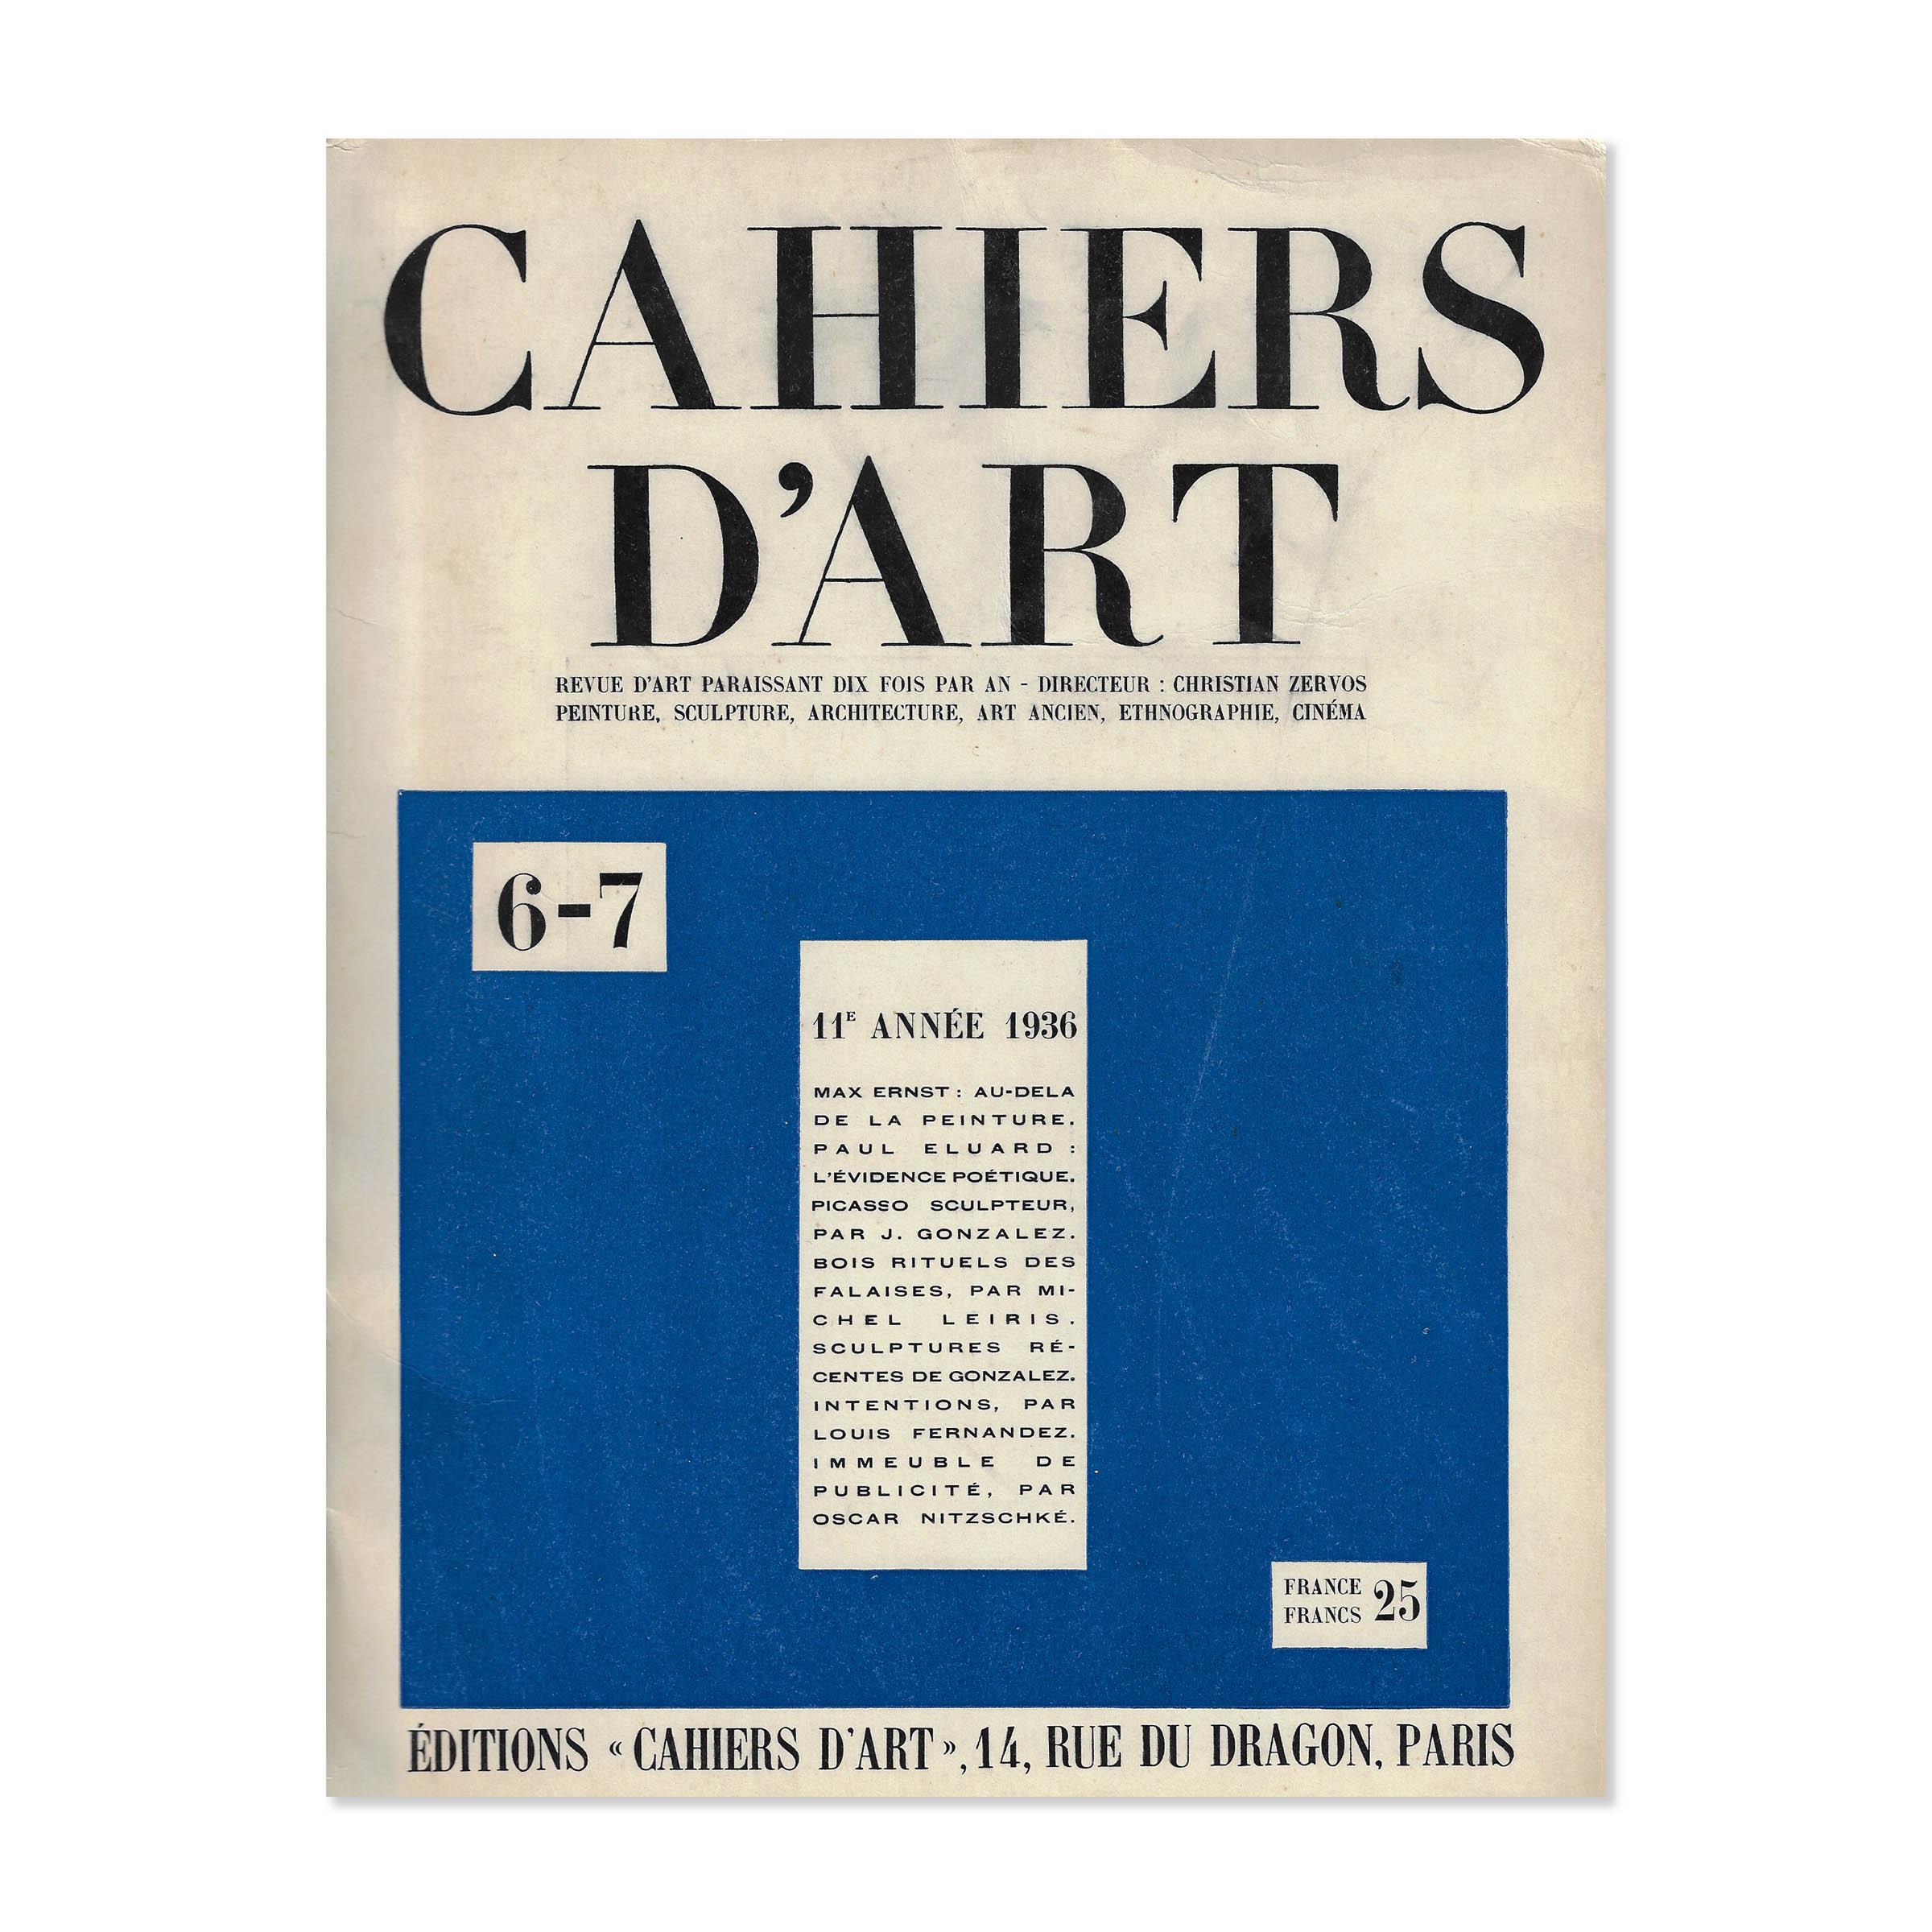 Revue Cahiers d'Art, 1936, n°6-7. Cover view